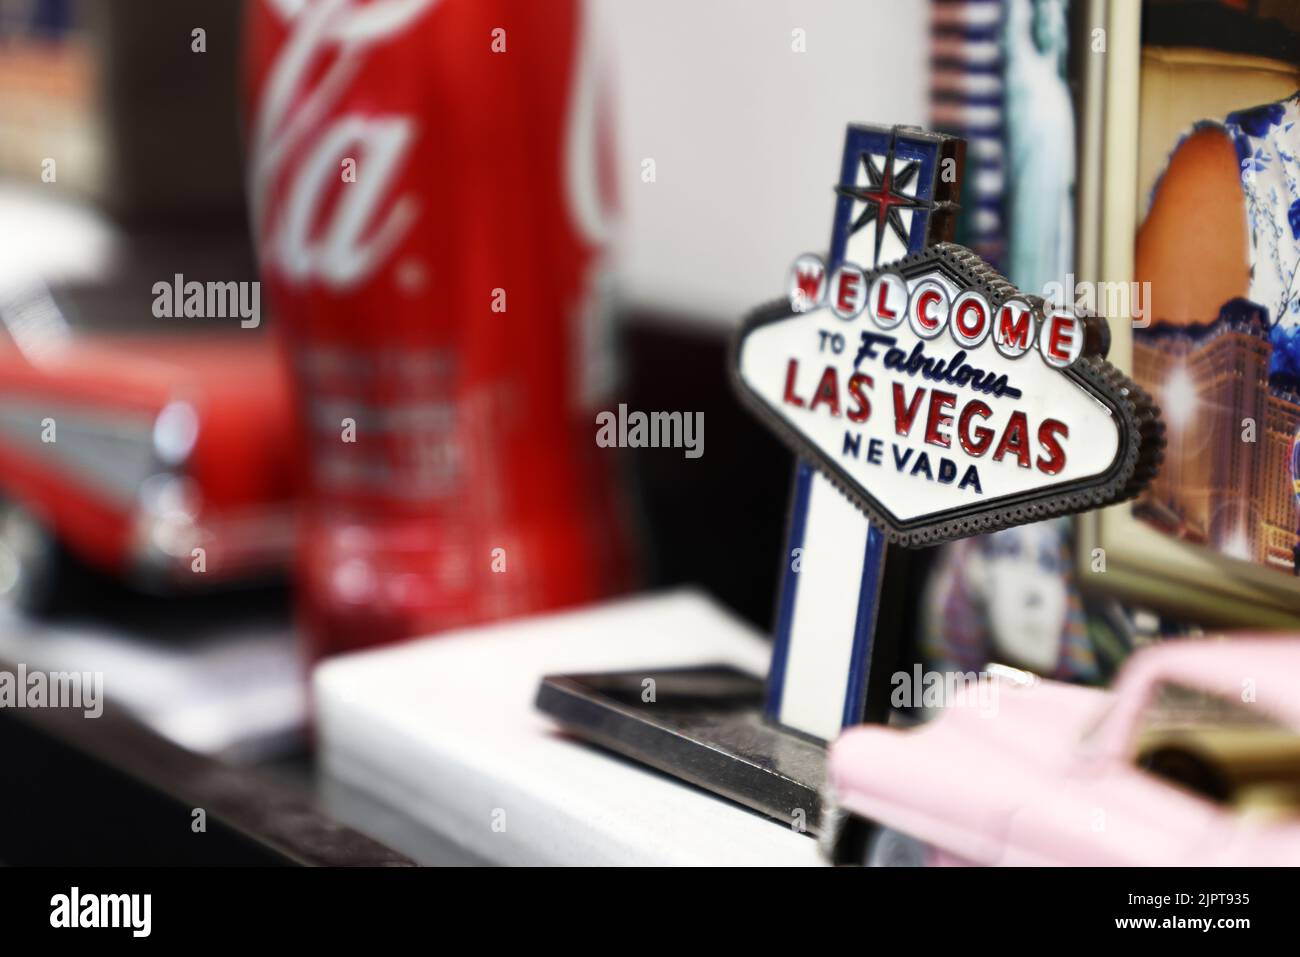 Signs and various souvenirs in a souvenir shop, a Las Vegas souvenir. Stock Photo